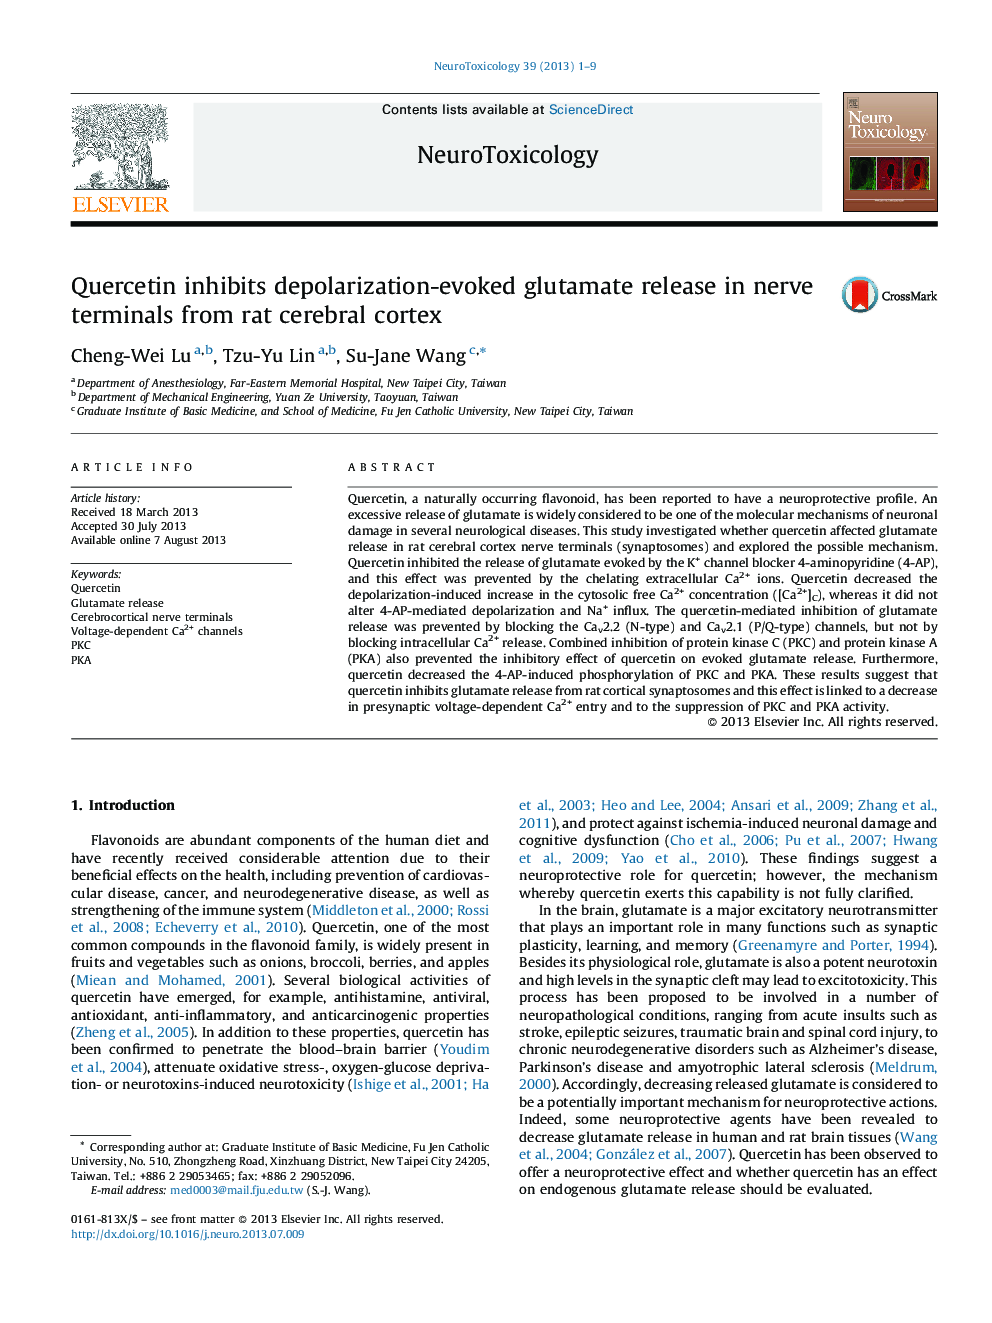 Quercetin inhibits depolarization-evoked glutamate release in nerve terminals from rat cerebral cortex